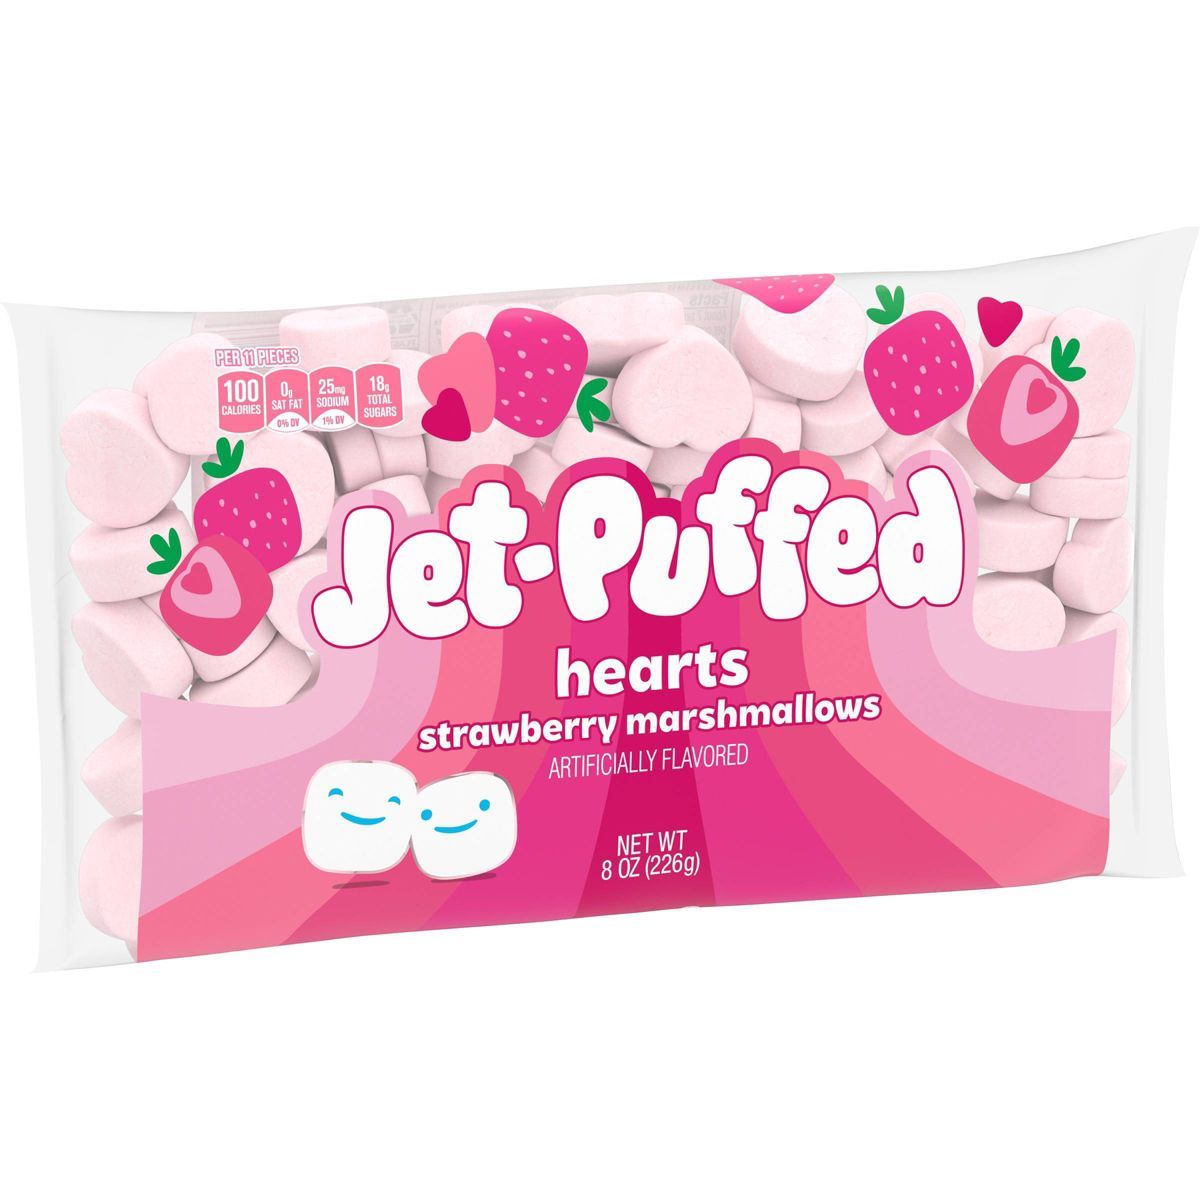 Kraft Jet-Puffed Strawberry Marshmallow Hearts - 8oz | Target